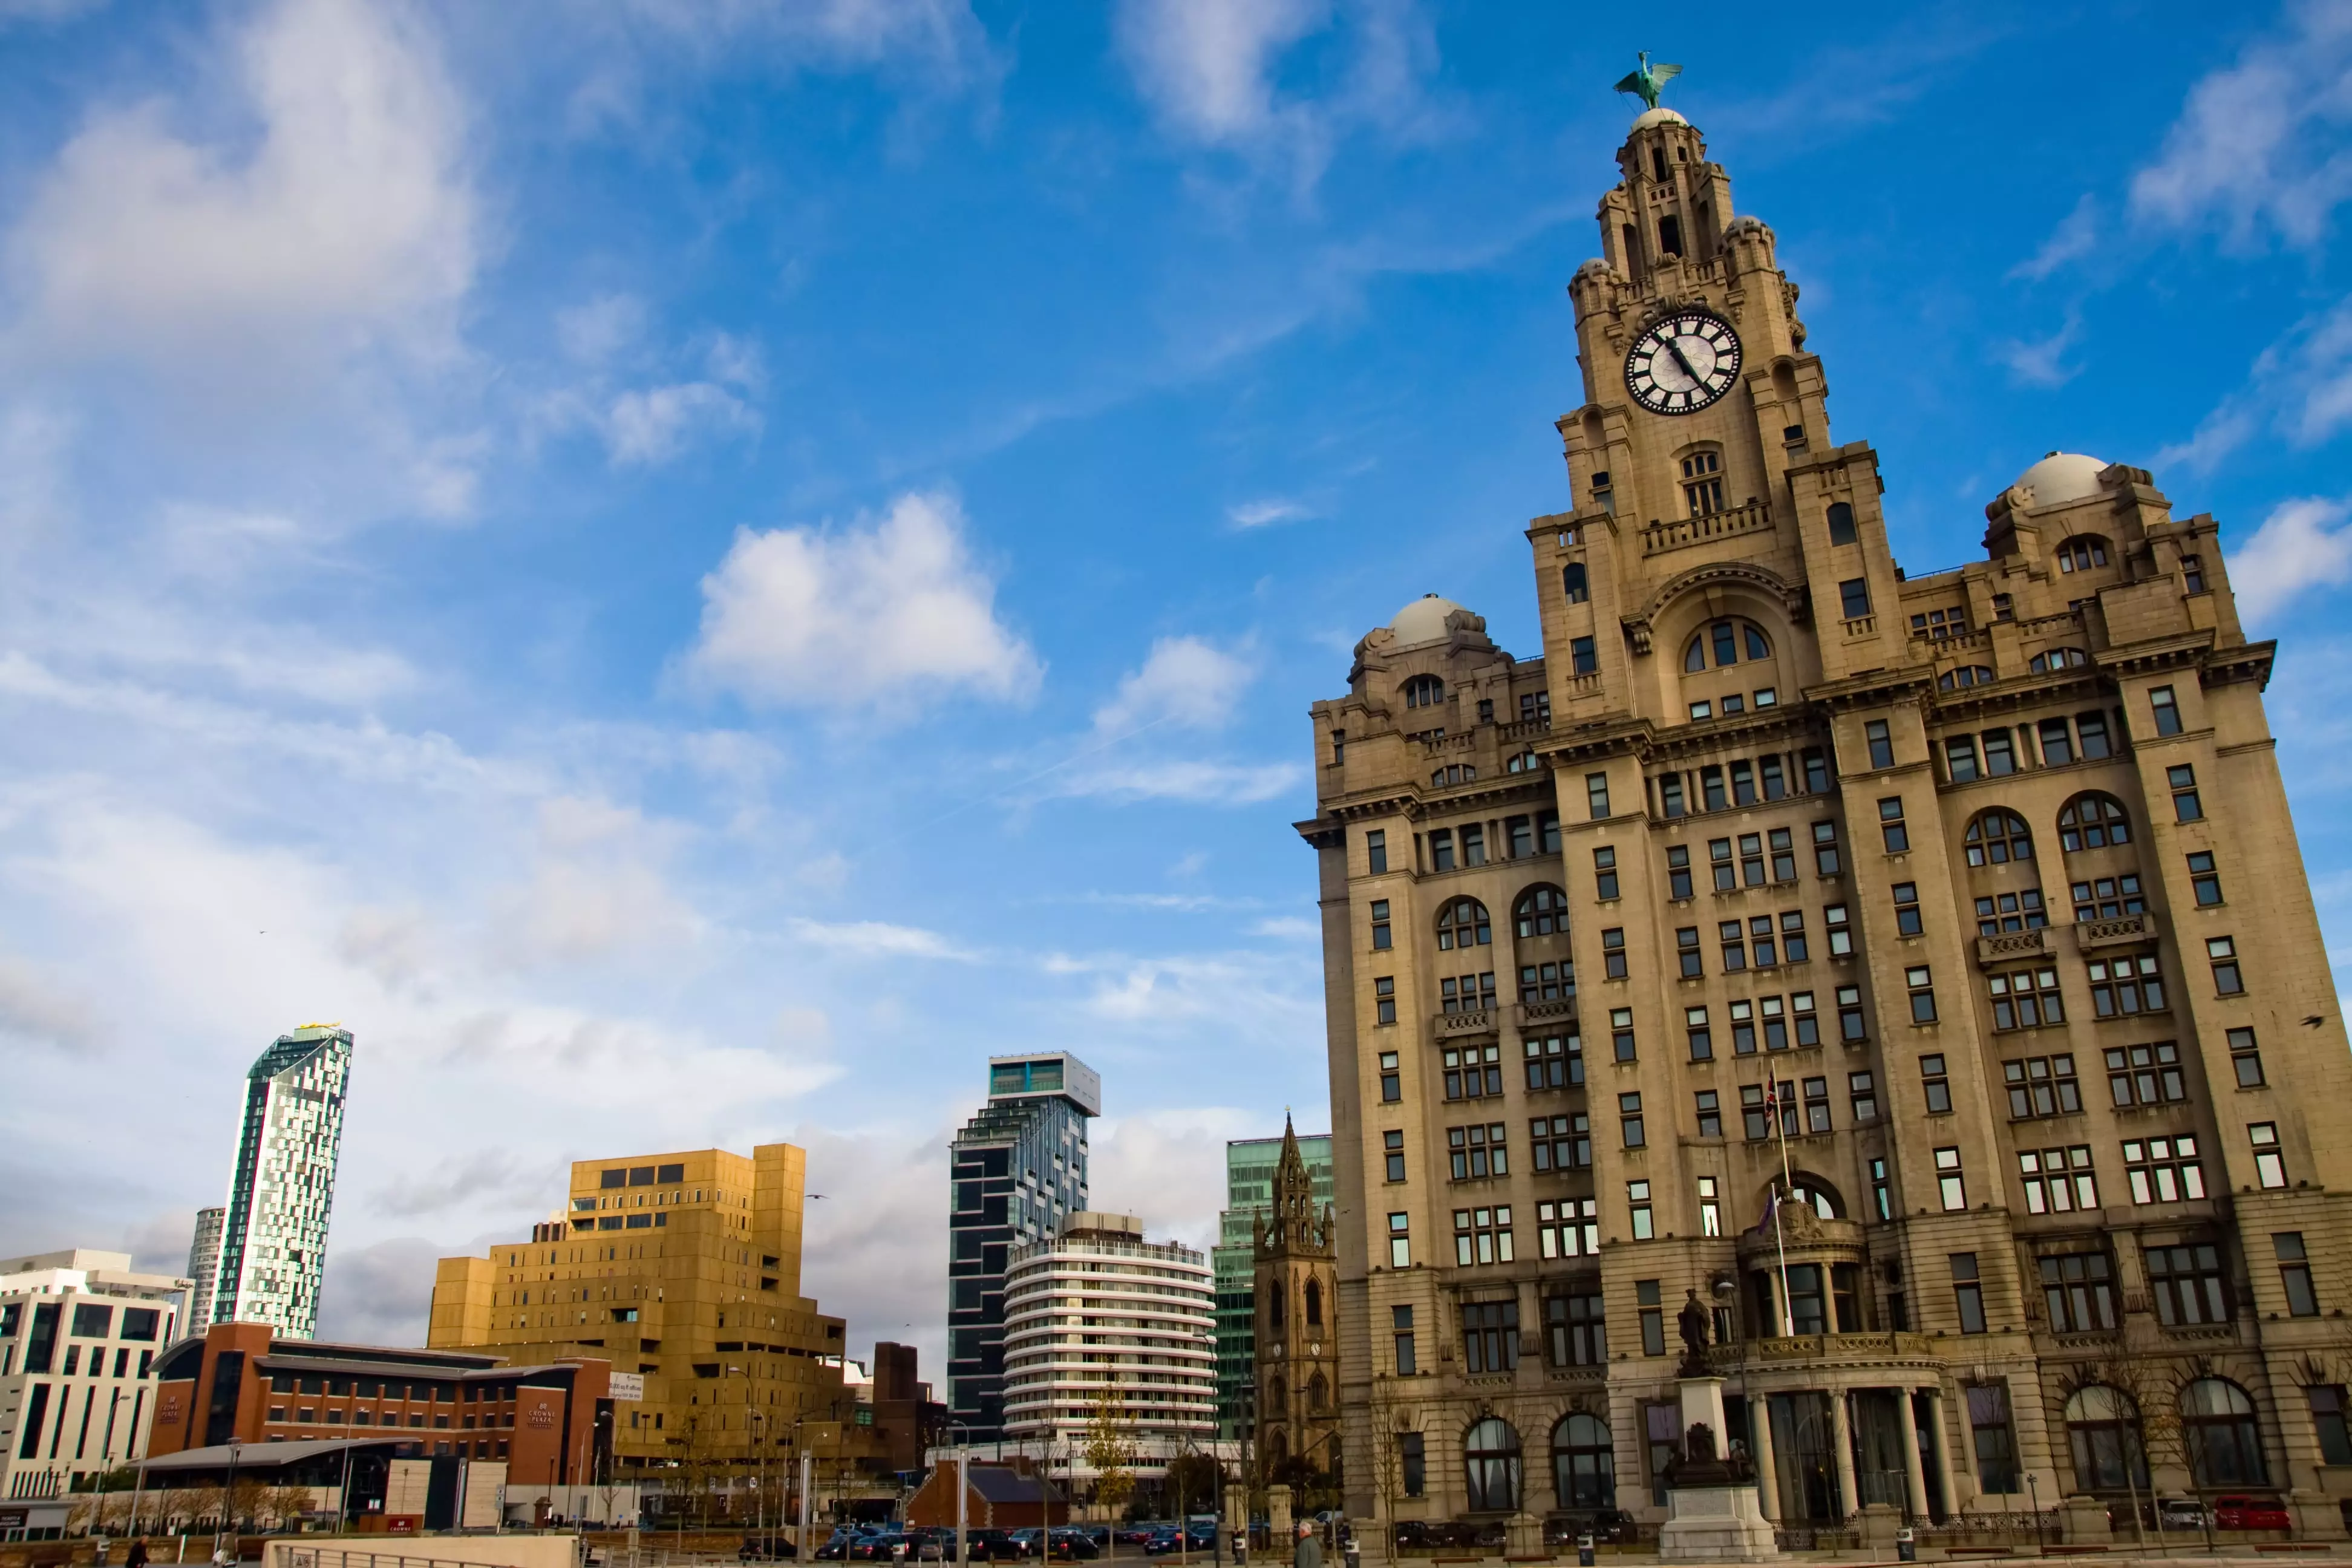 Wide angle of Liverpool